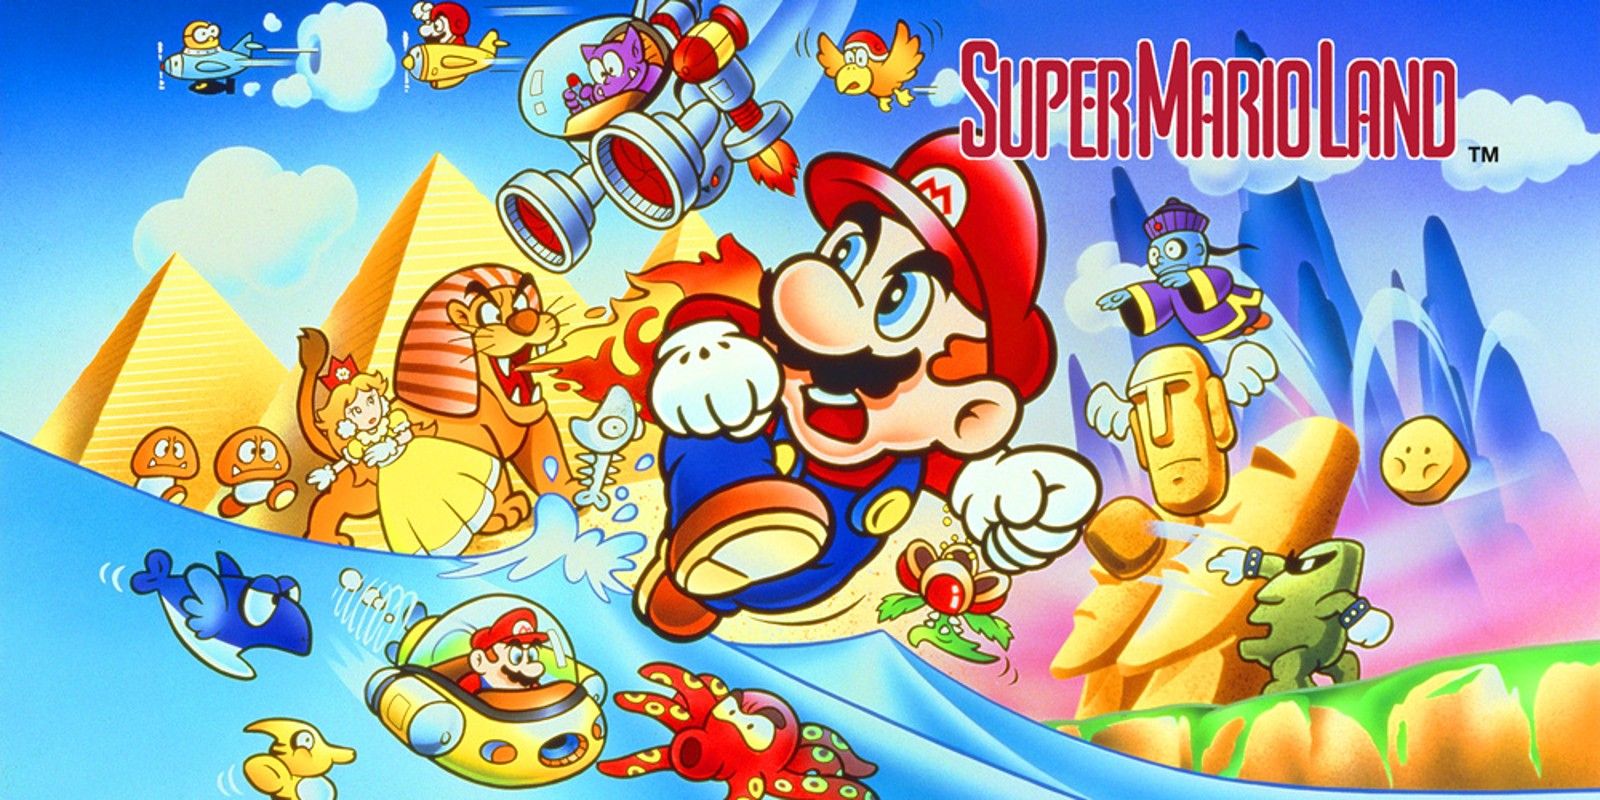 Artwork for Super Mario Land on Game Boy.